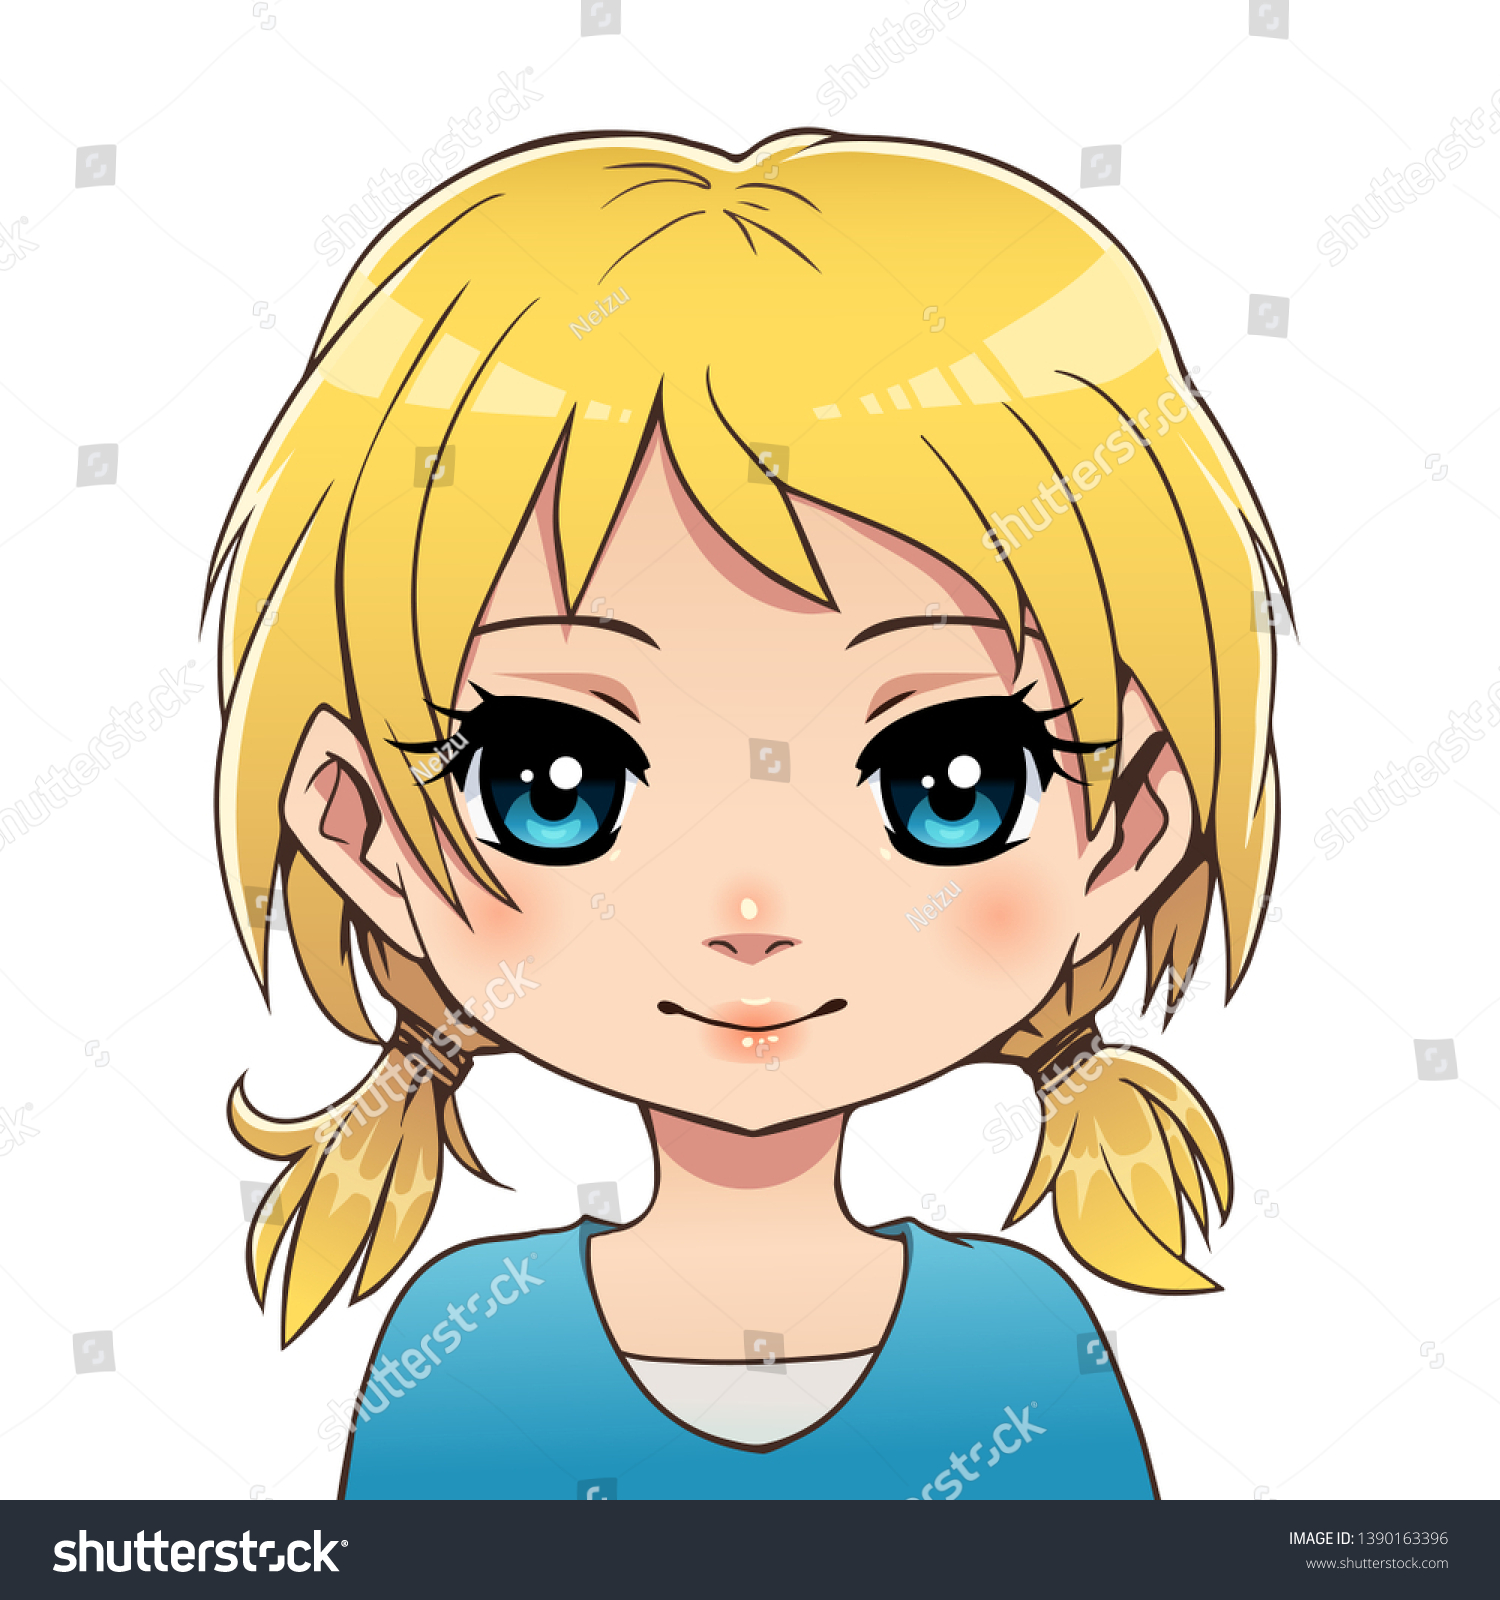 A cute blondie